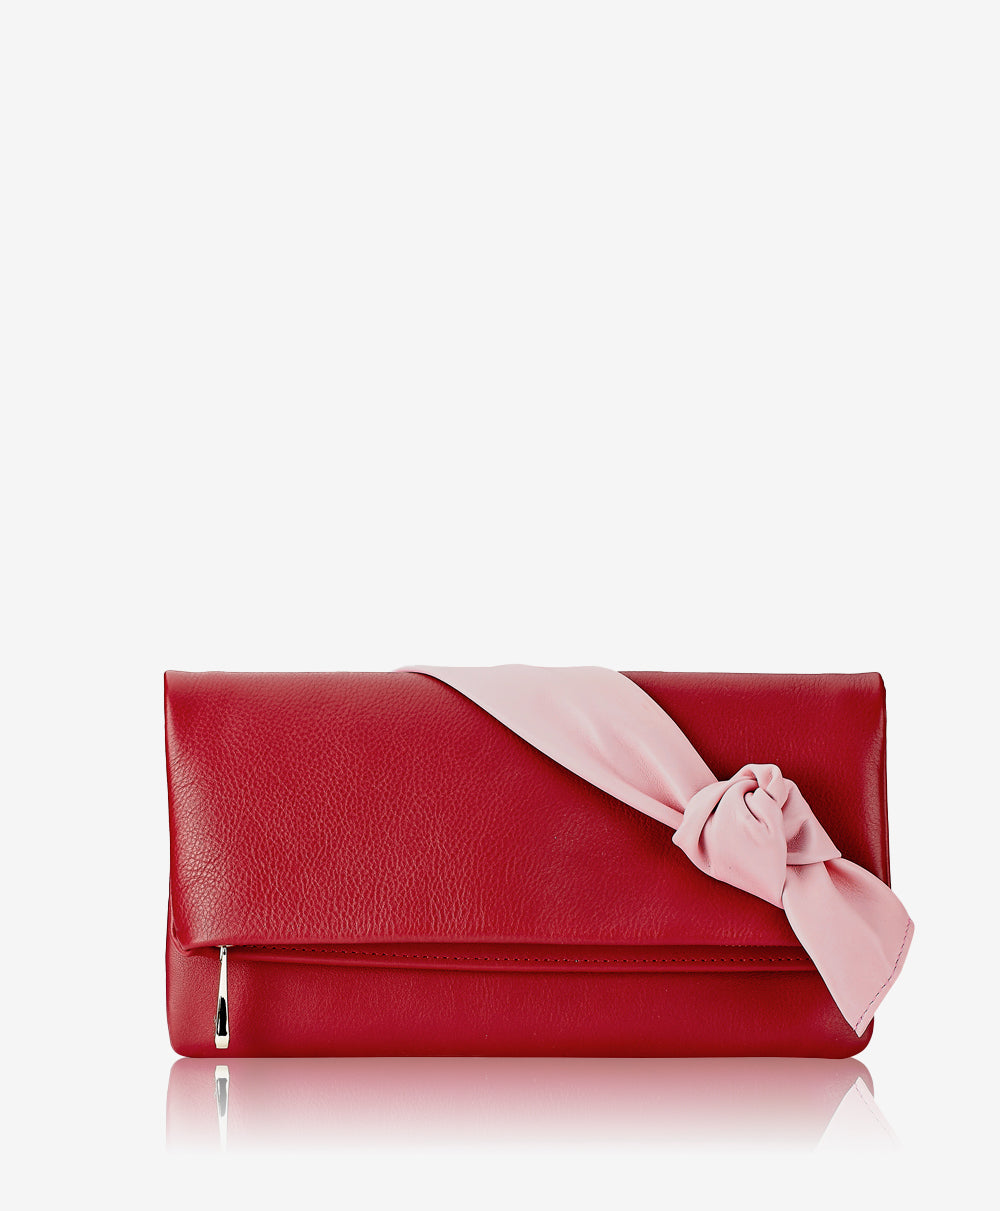 GiGi New York Stella With A Twist Red French Calfskin Leather